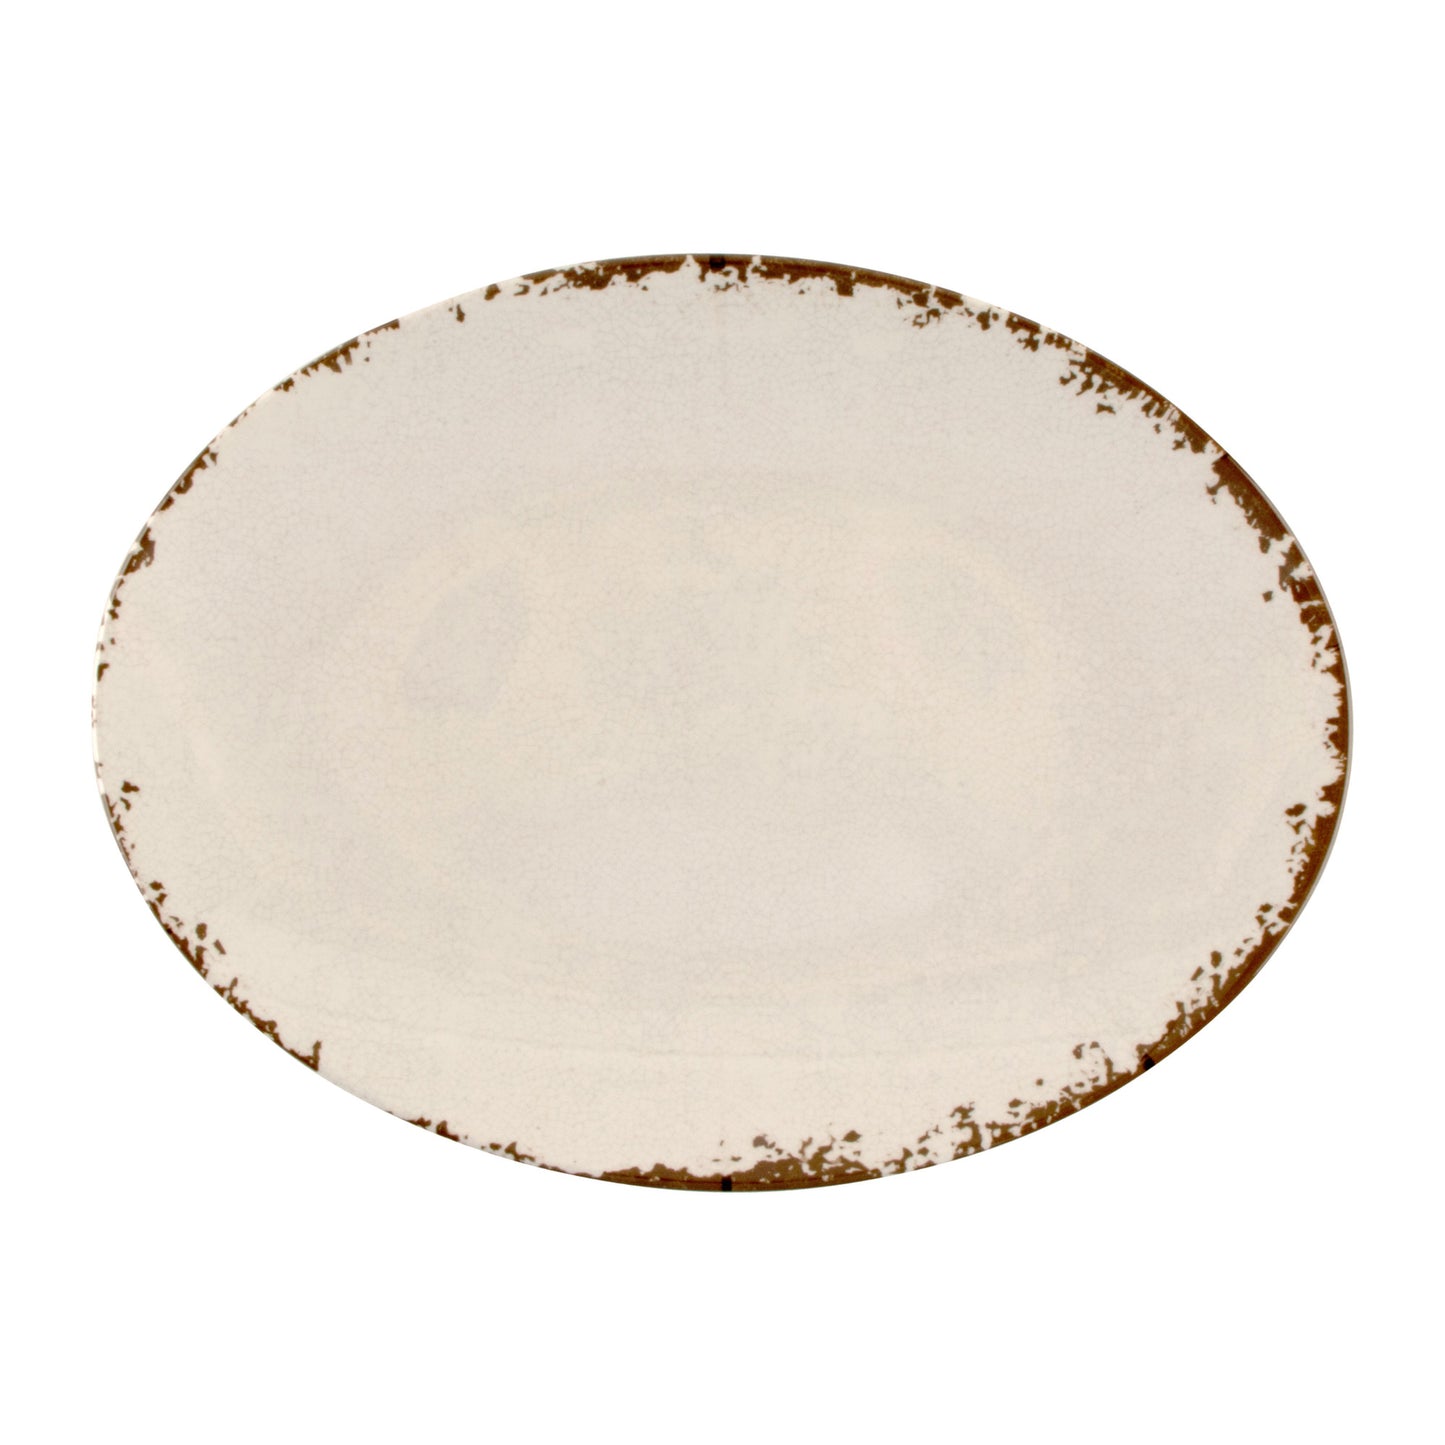 15" X 11" Oval Platter